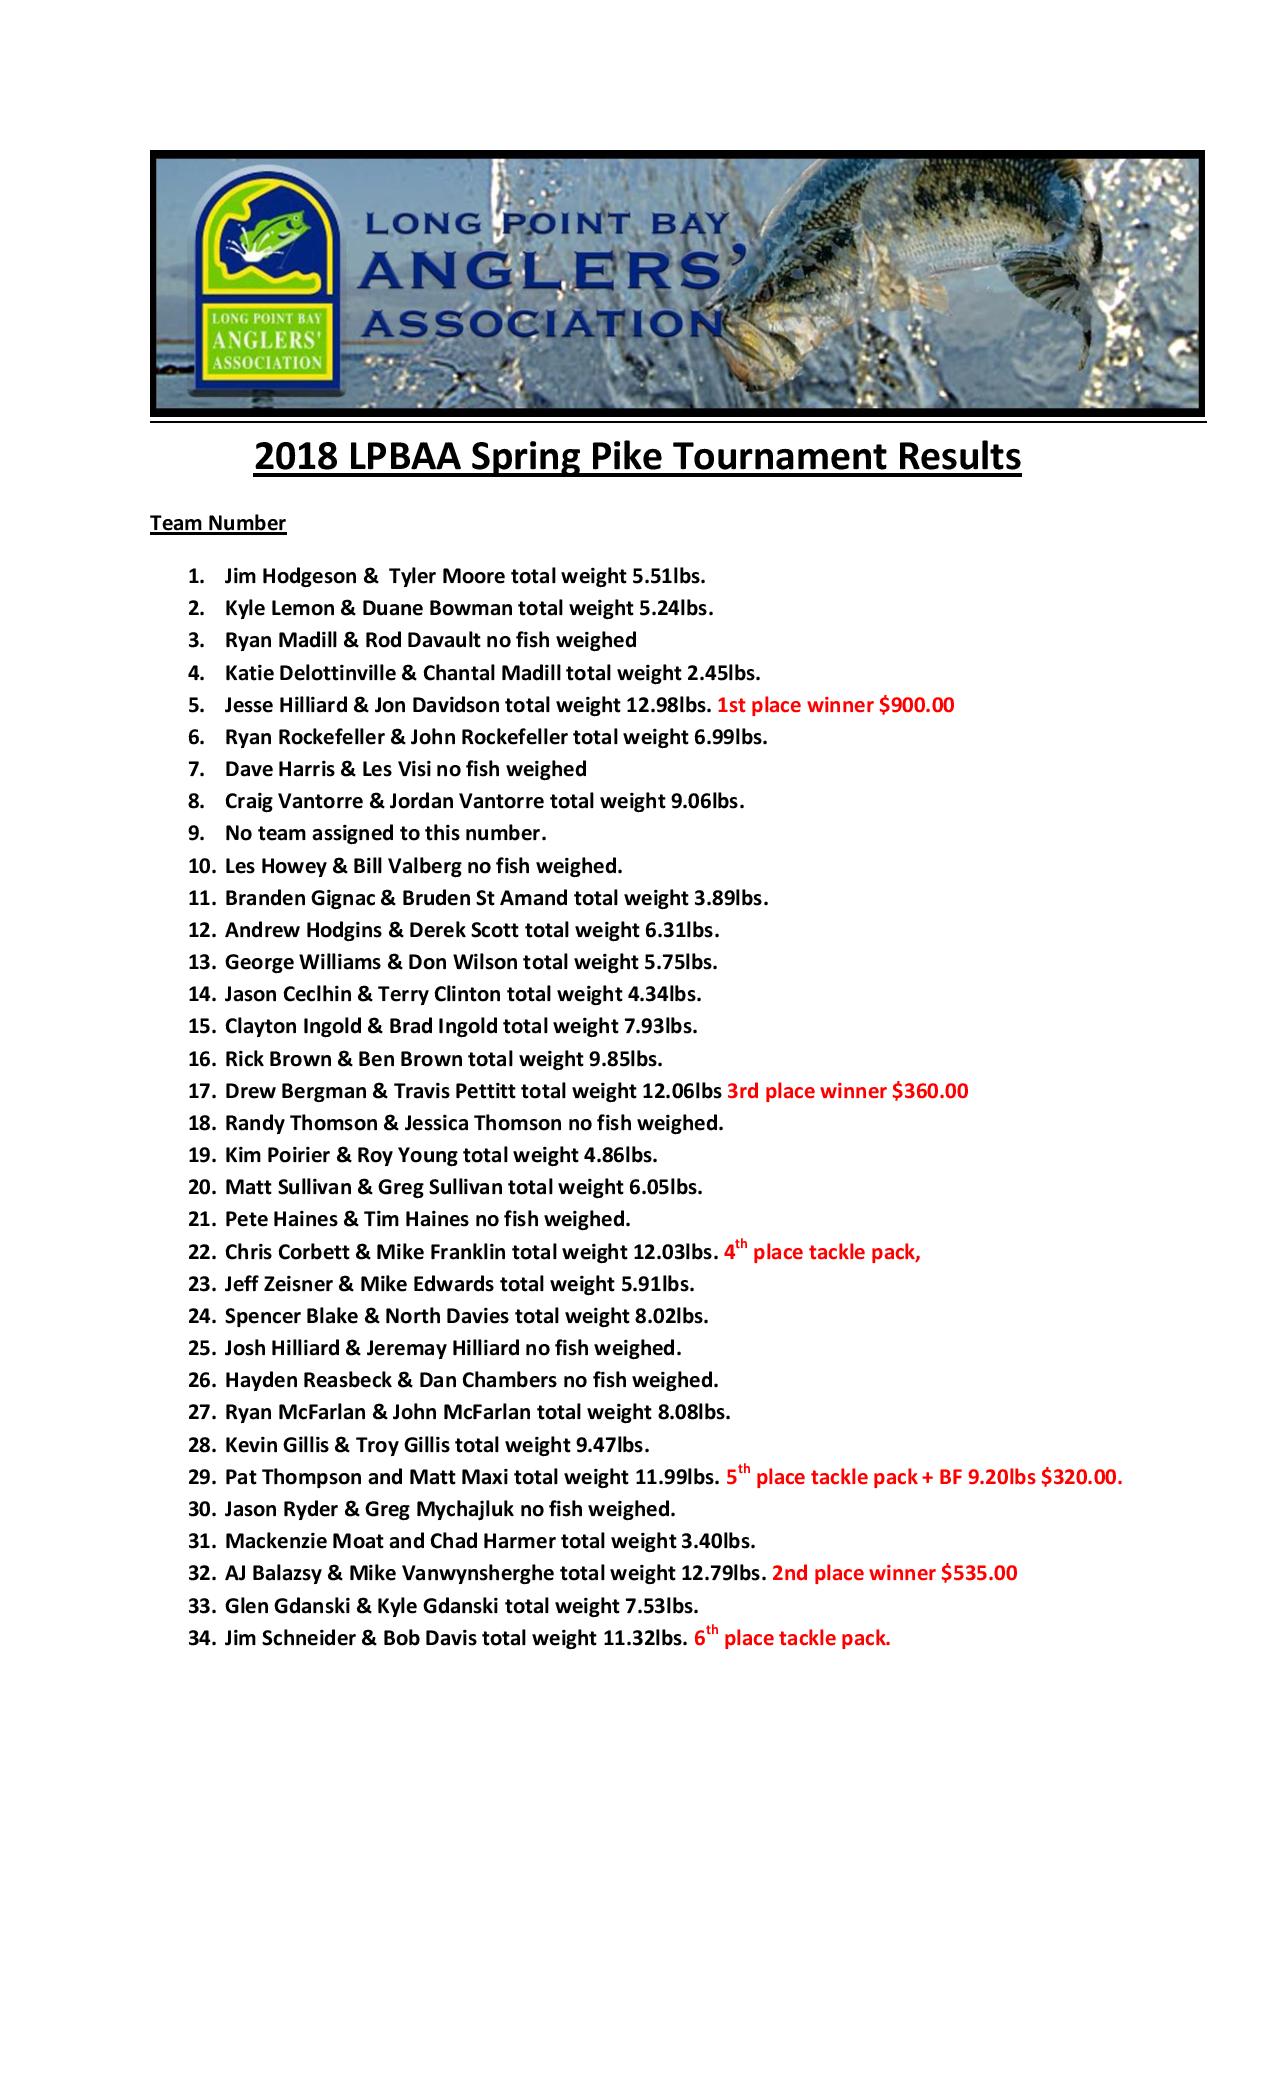 2018 LPBAA Pike Tournament Results.jpg